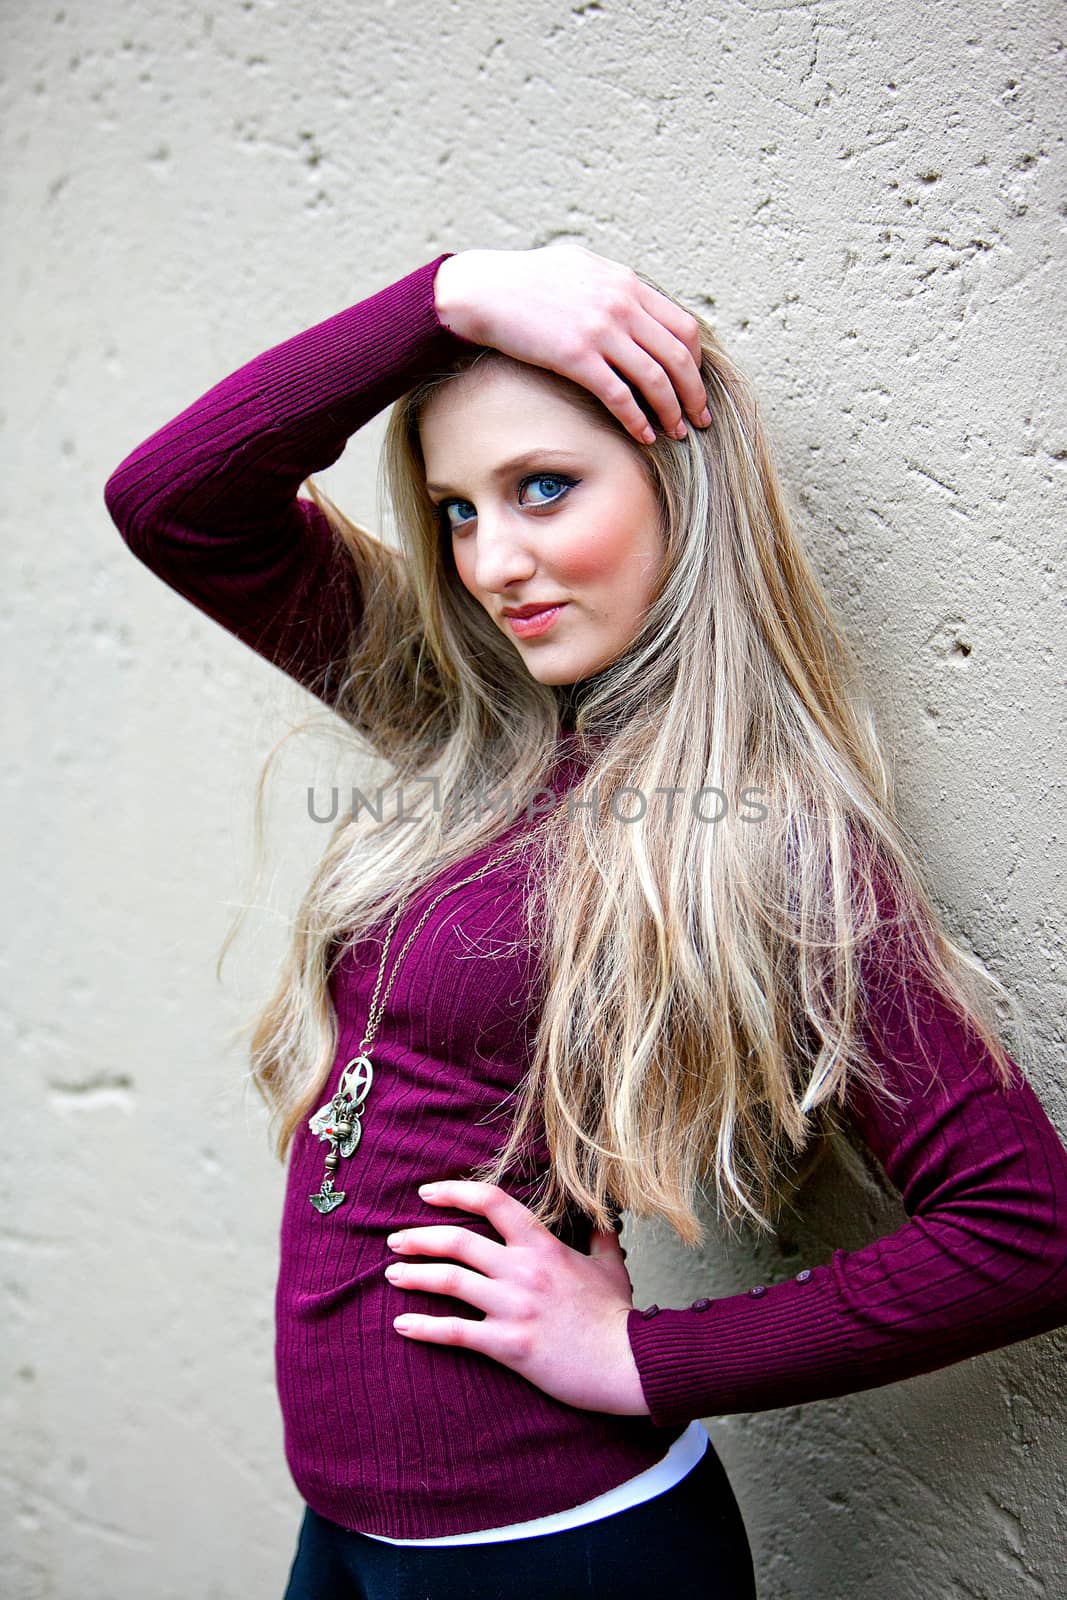 Stunning female model posing against grey textured wall